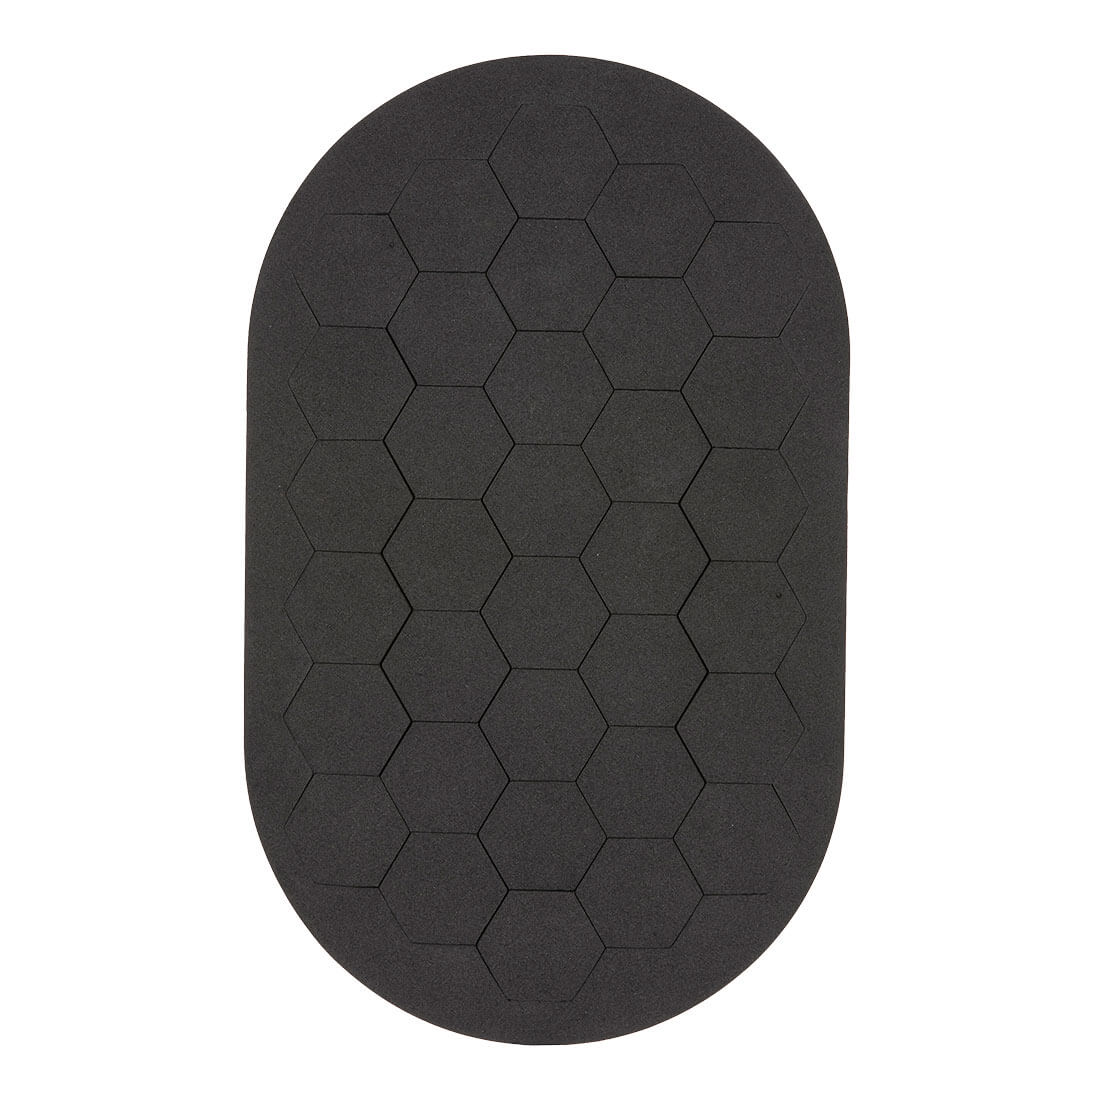 Flexible 3 Layer Knee Pad Inserts - Black